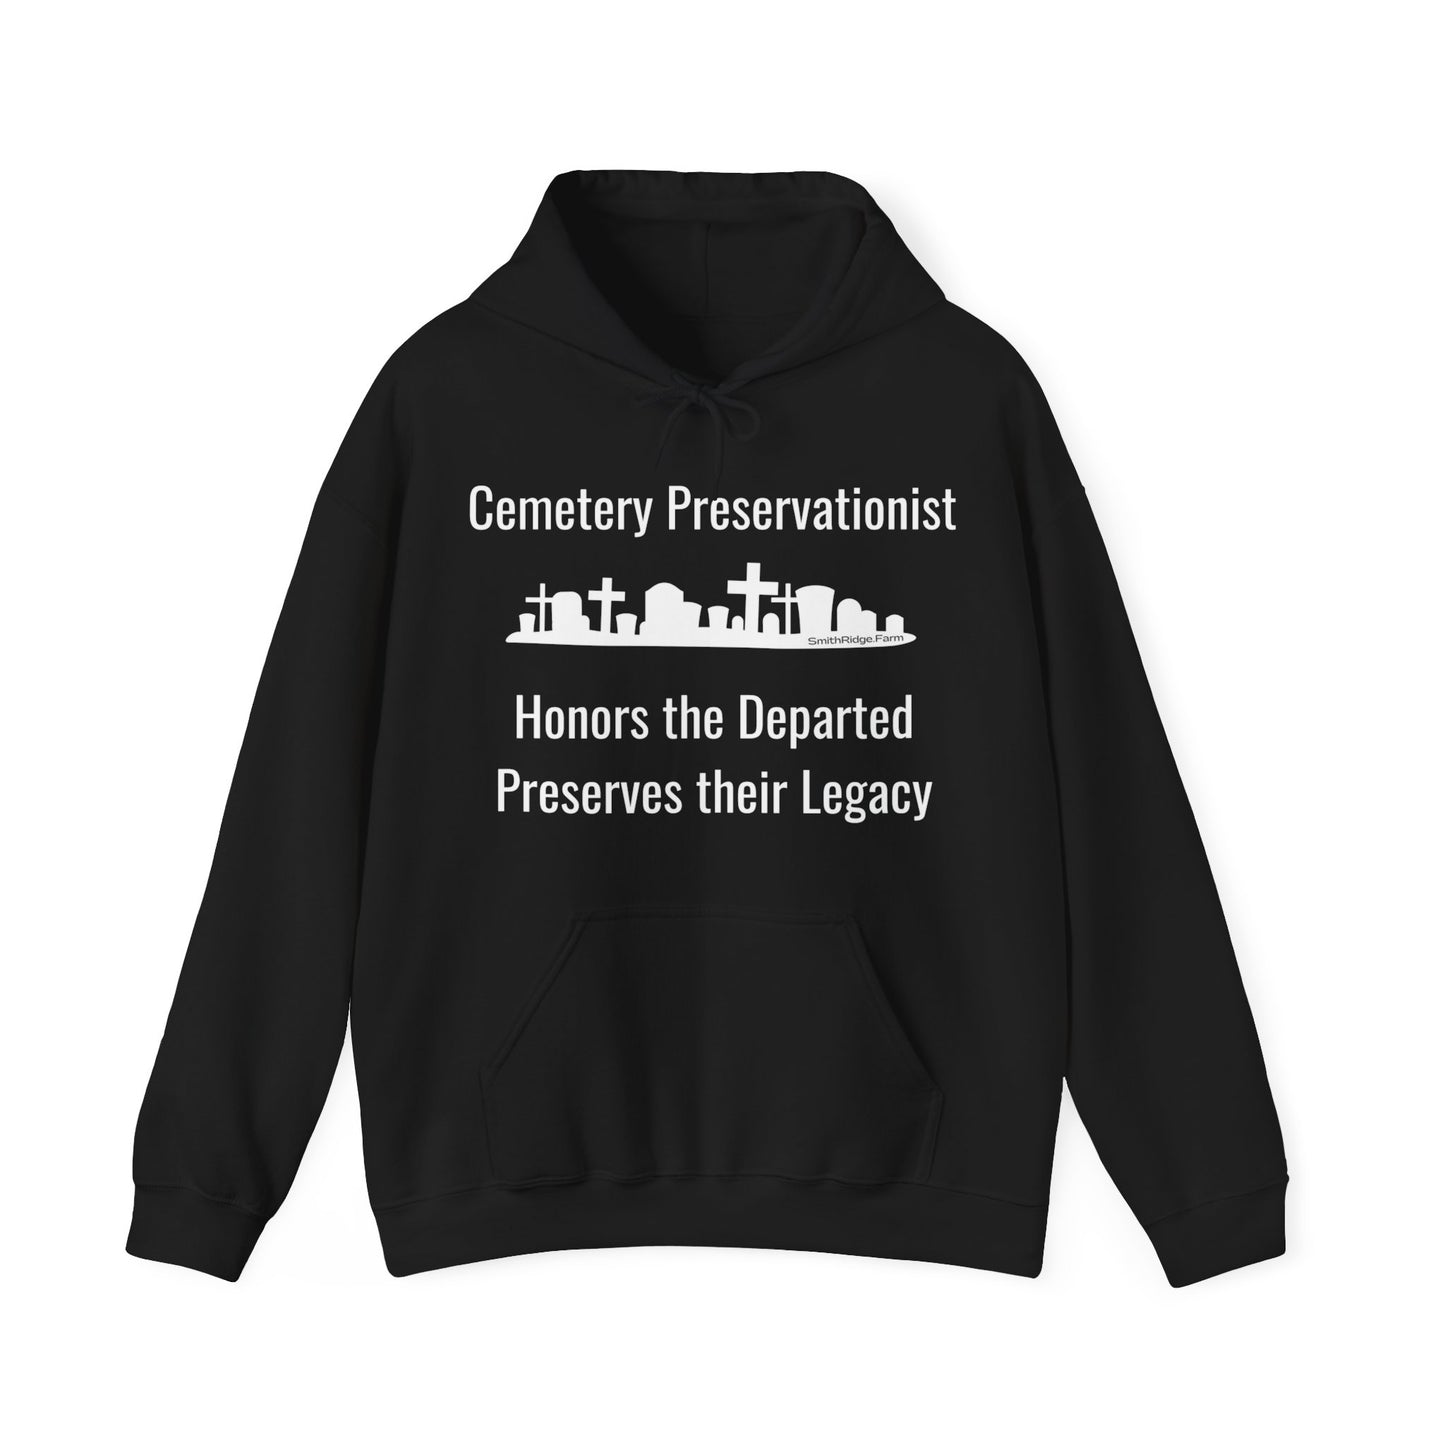 Cemetery Preservationist, Honors the Departed, Preserves their Legacy Hooded Sweatshirt